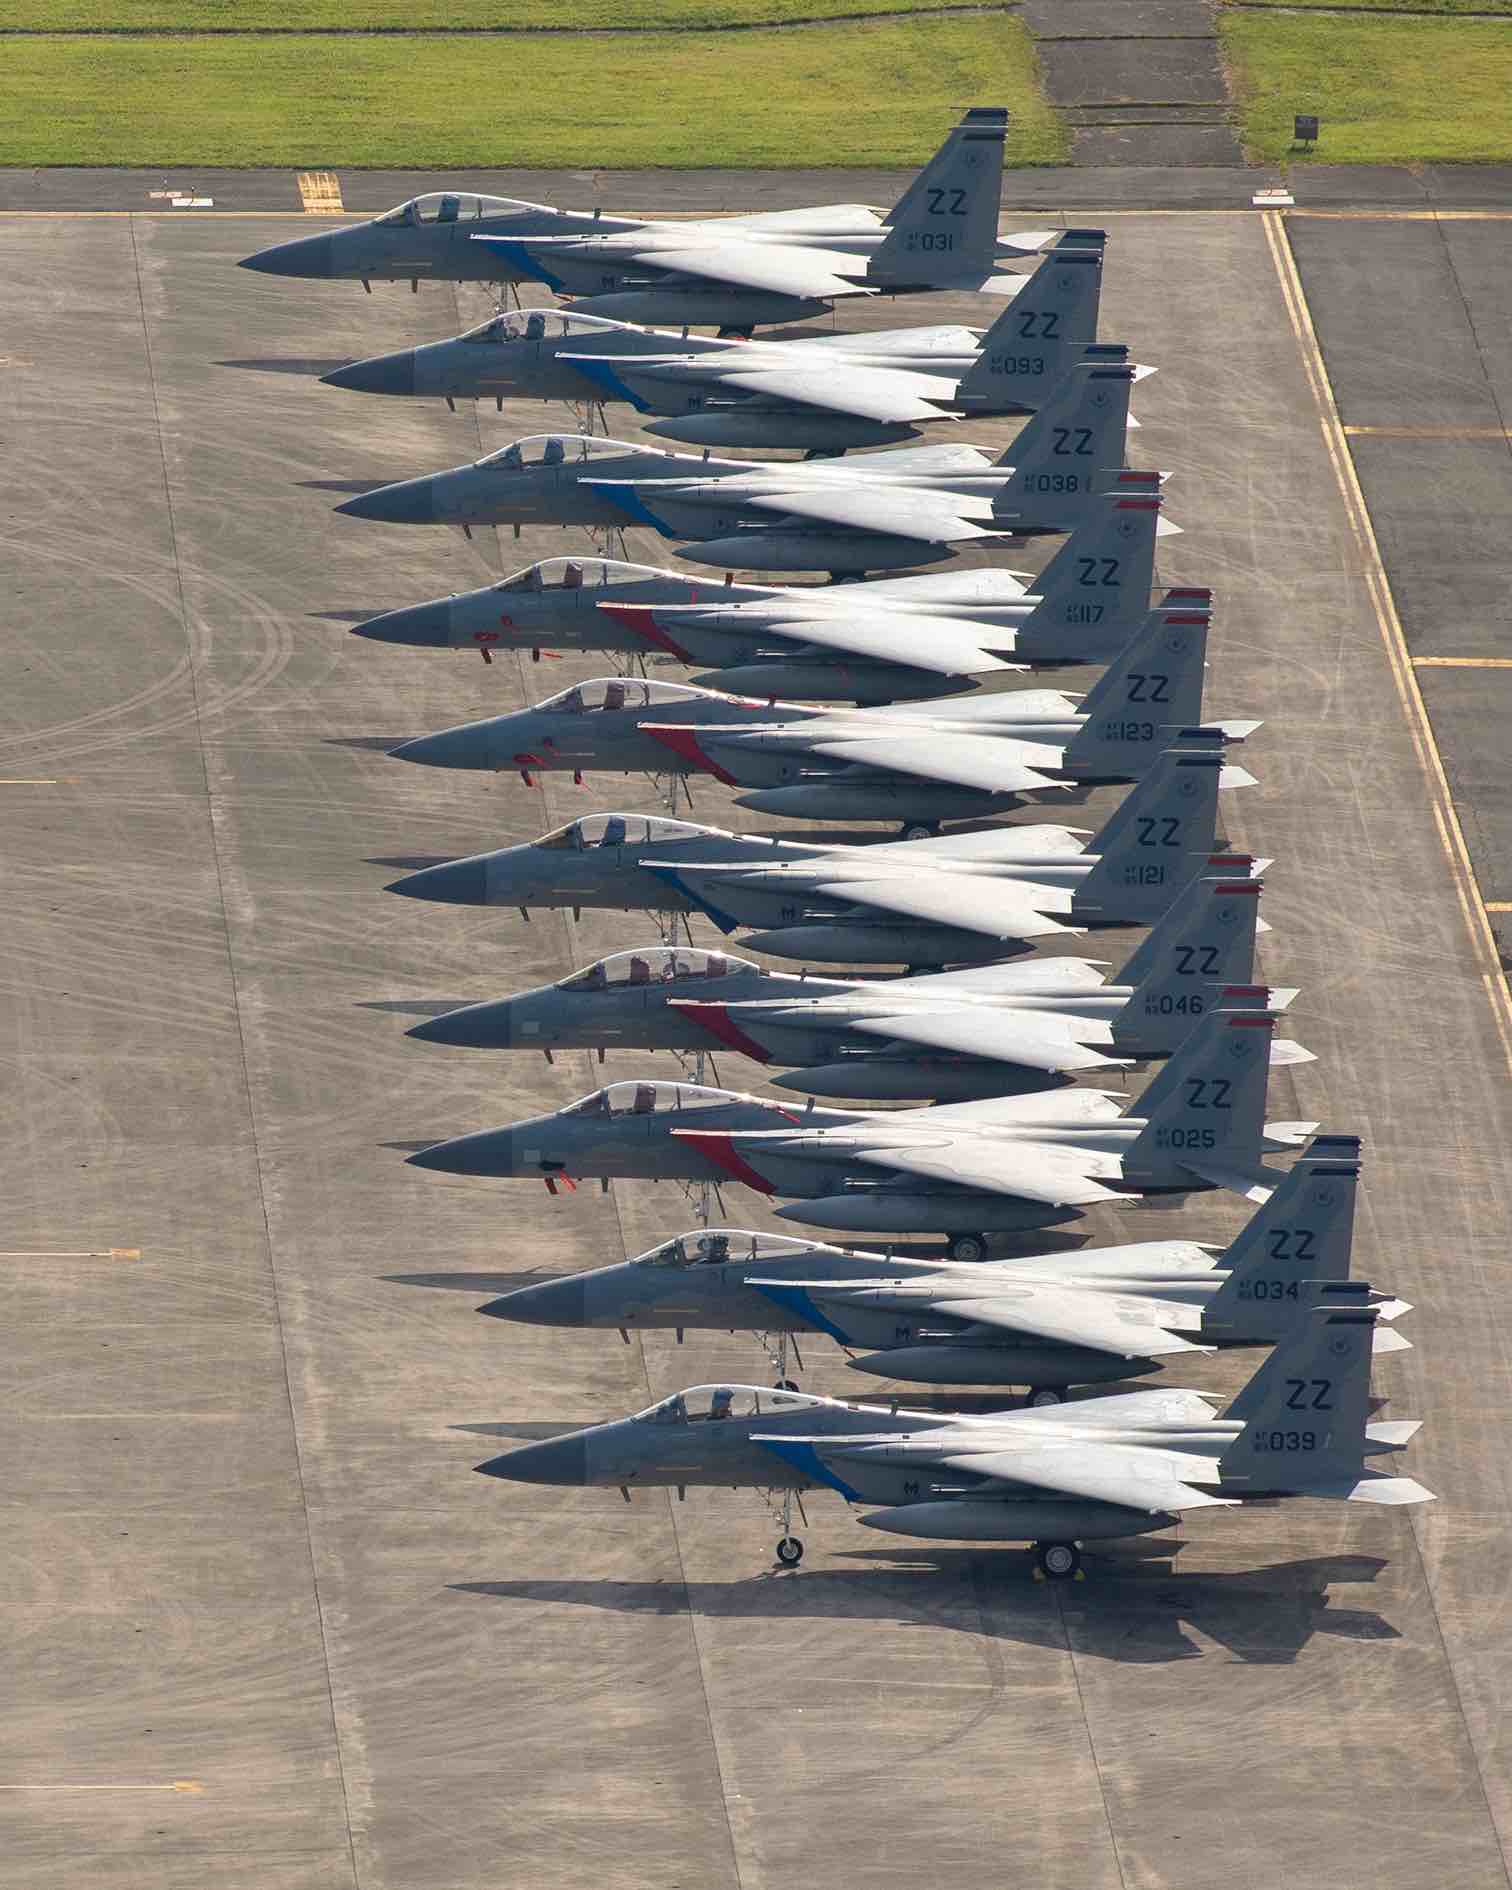 10 F-15 Strike Eagles, F-15 facts